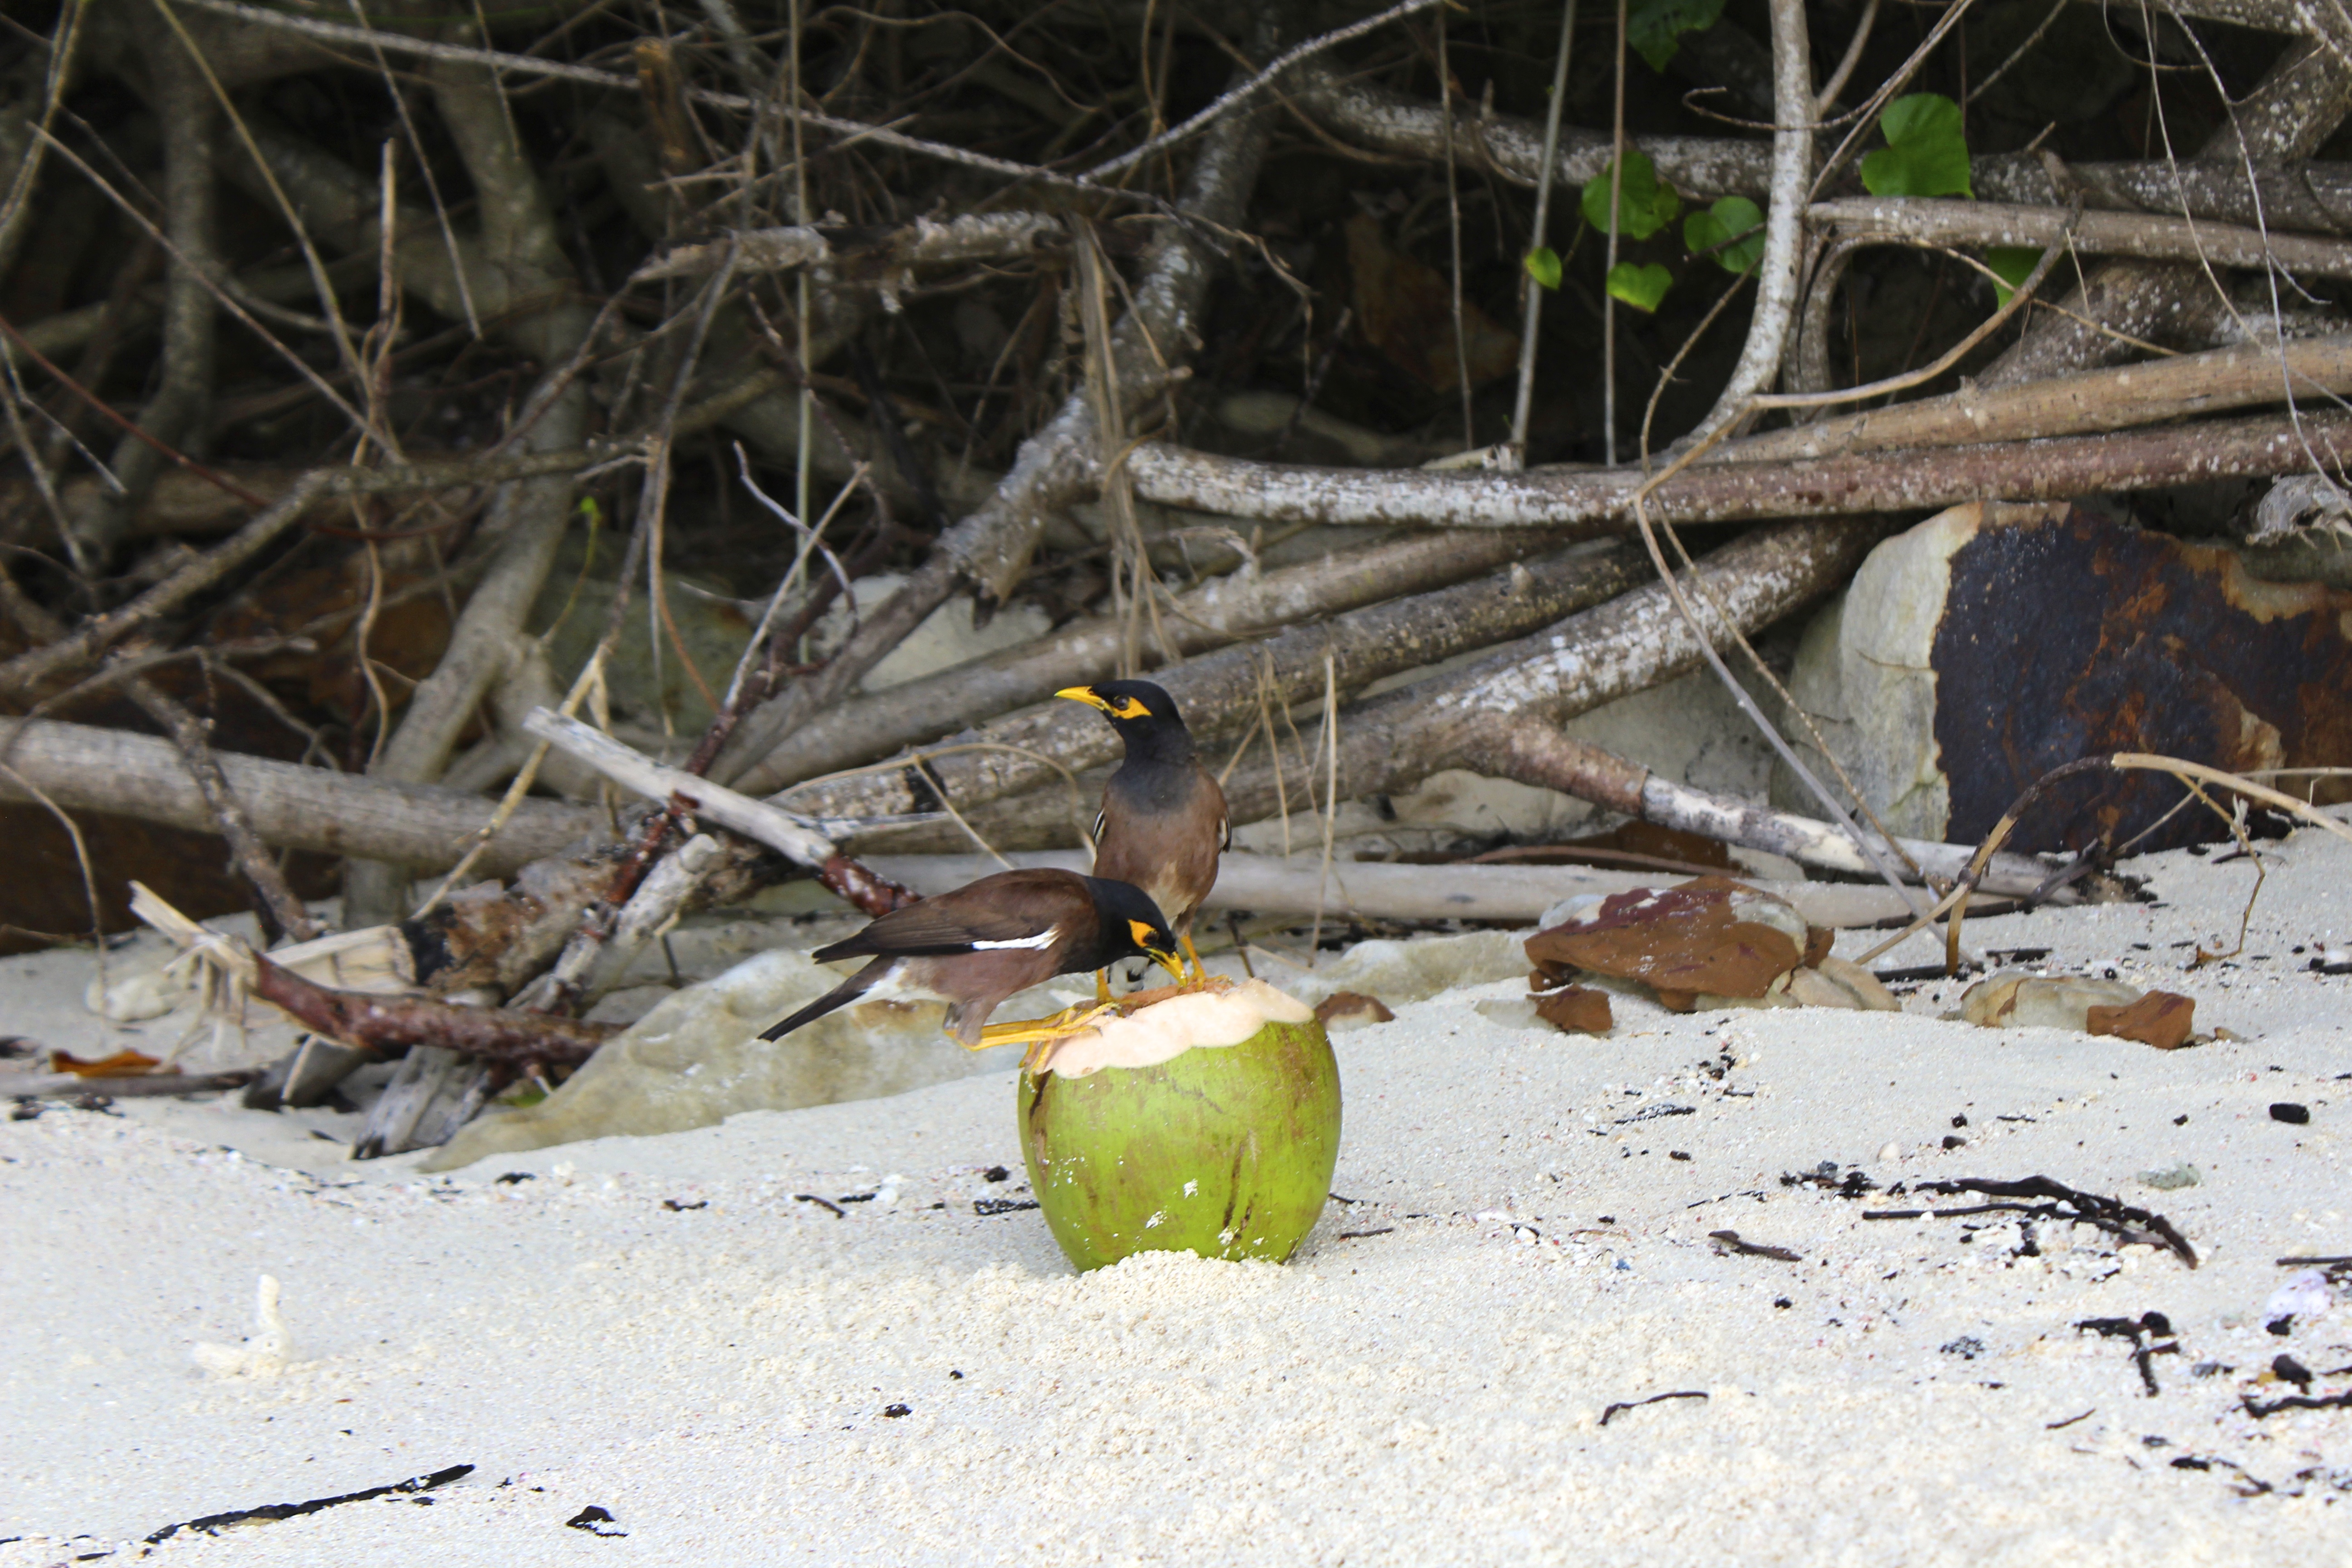 Island birds enjoying some fresh coconut on Bamboo Island.